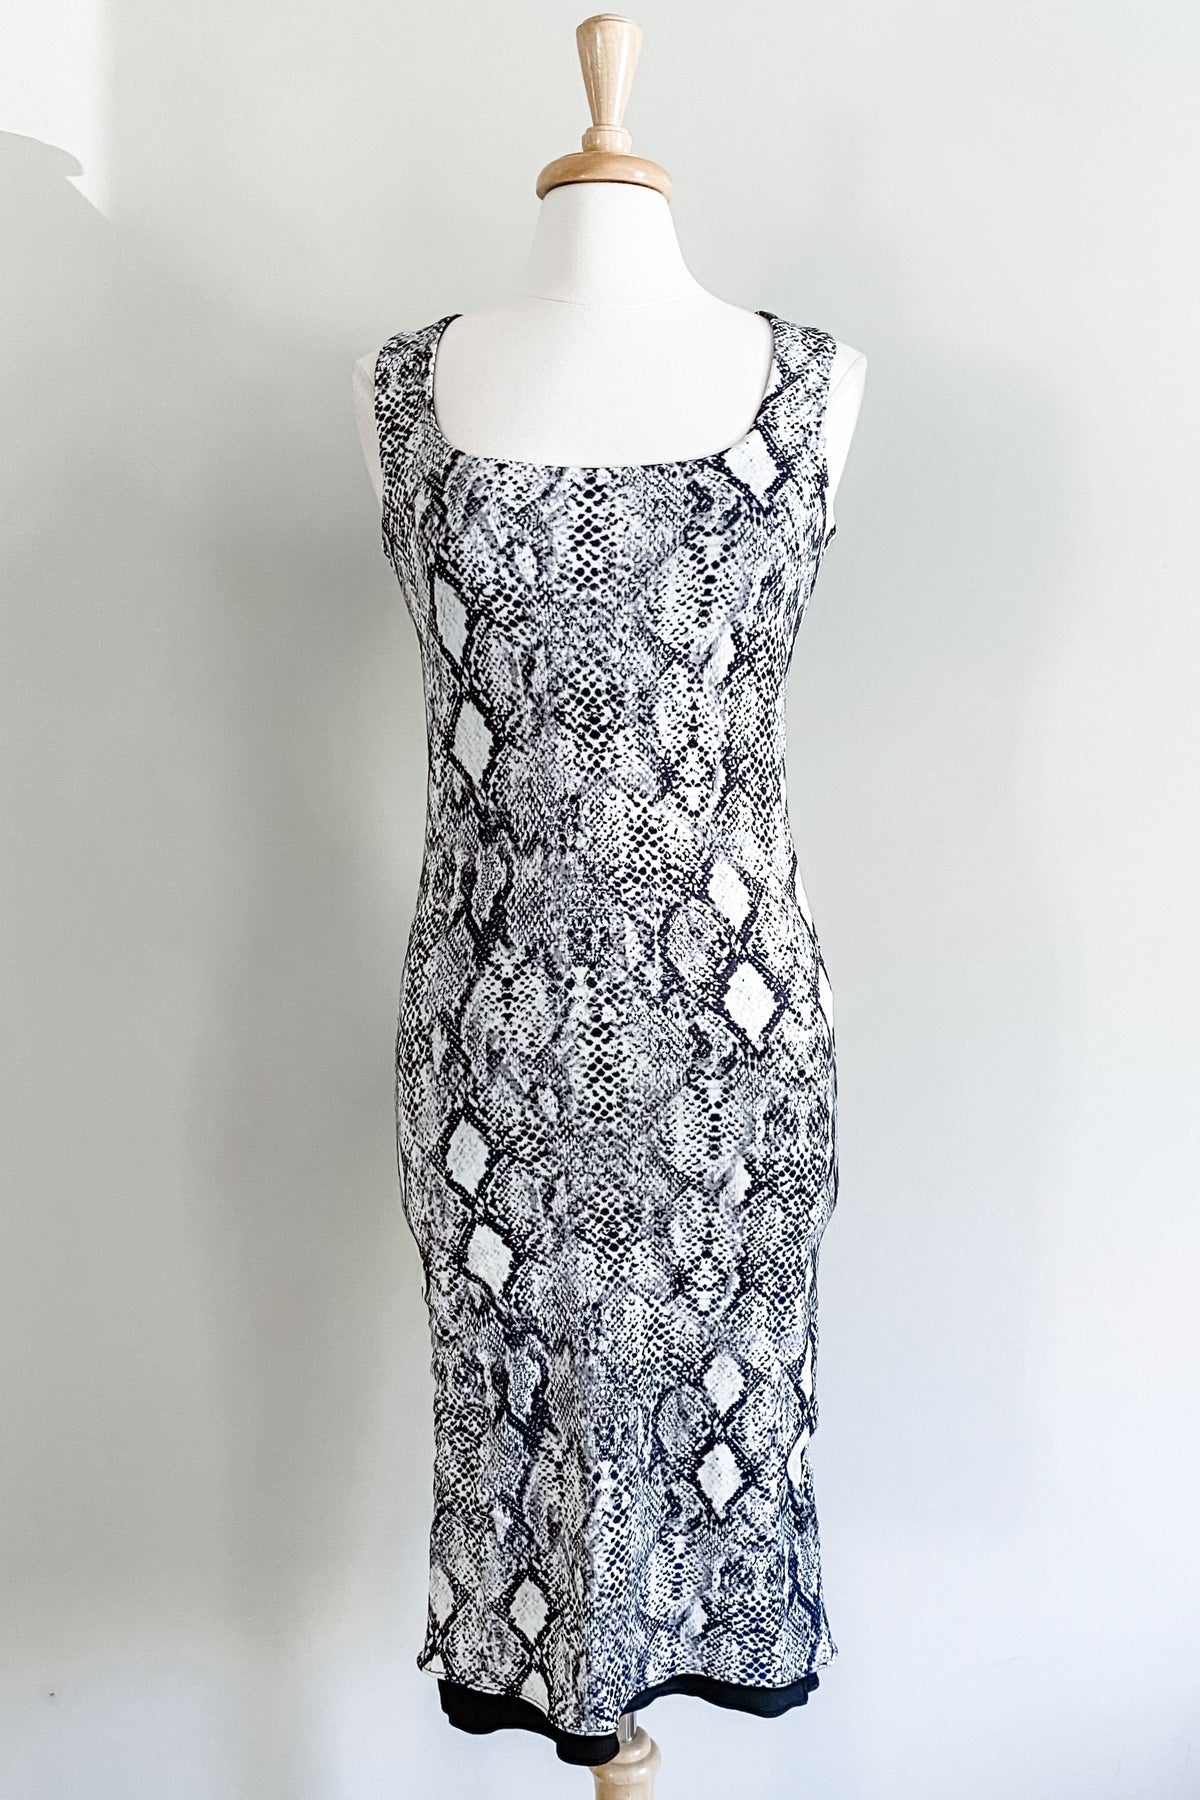 Diane Kroe Sheath Dress in White Snake Print